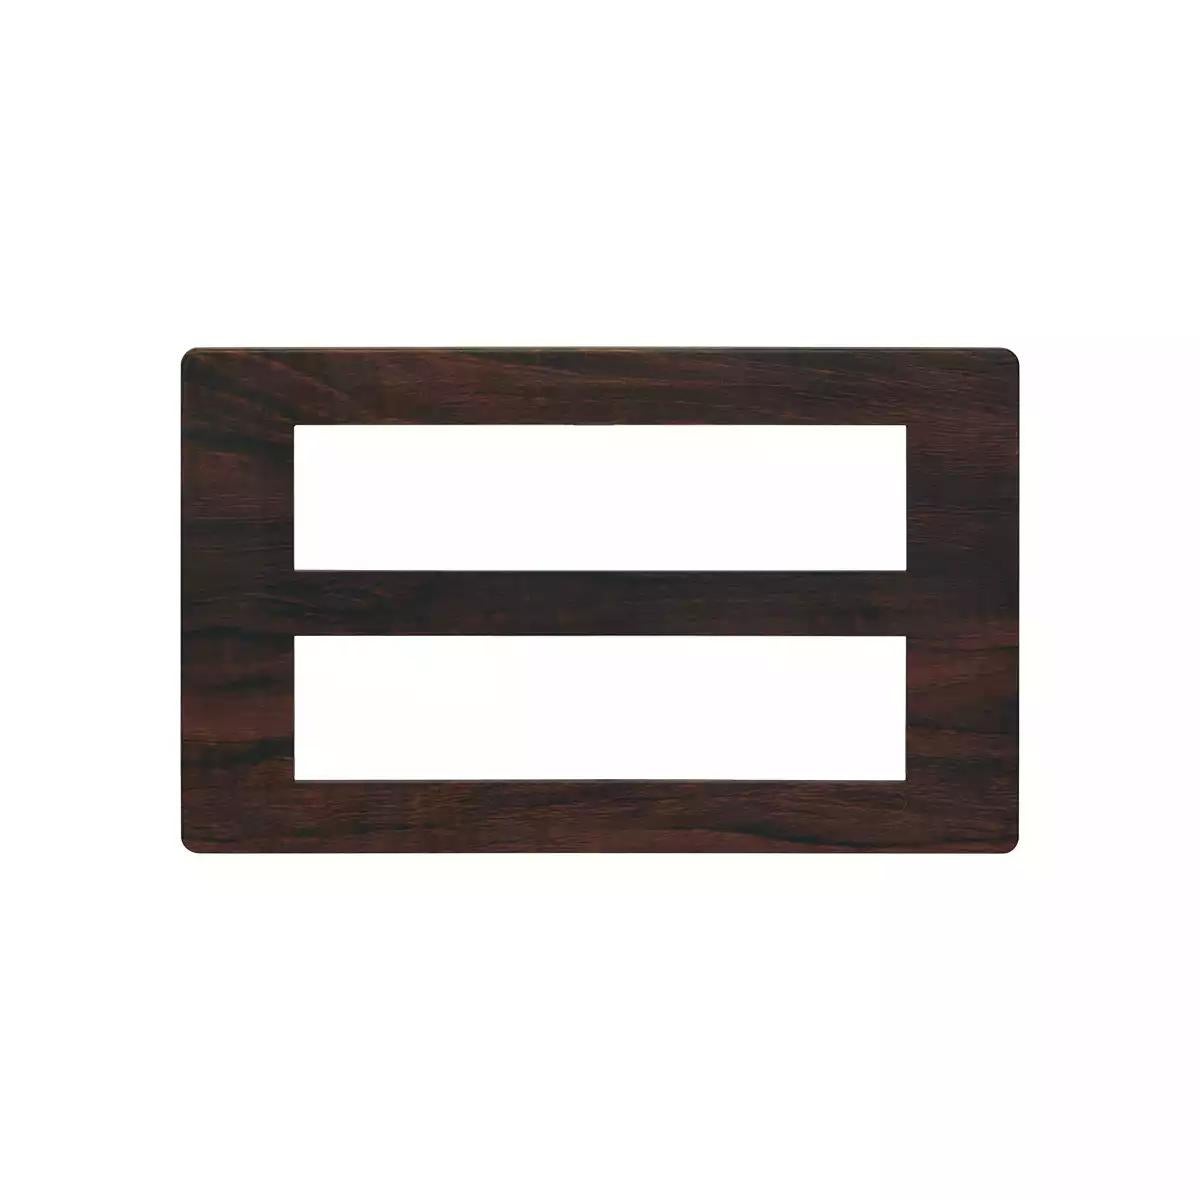 entice 16 module plate- Dark Chocolate Wood